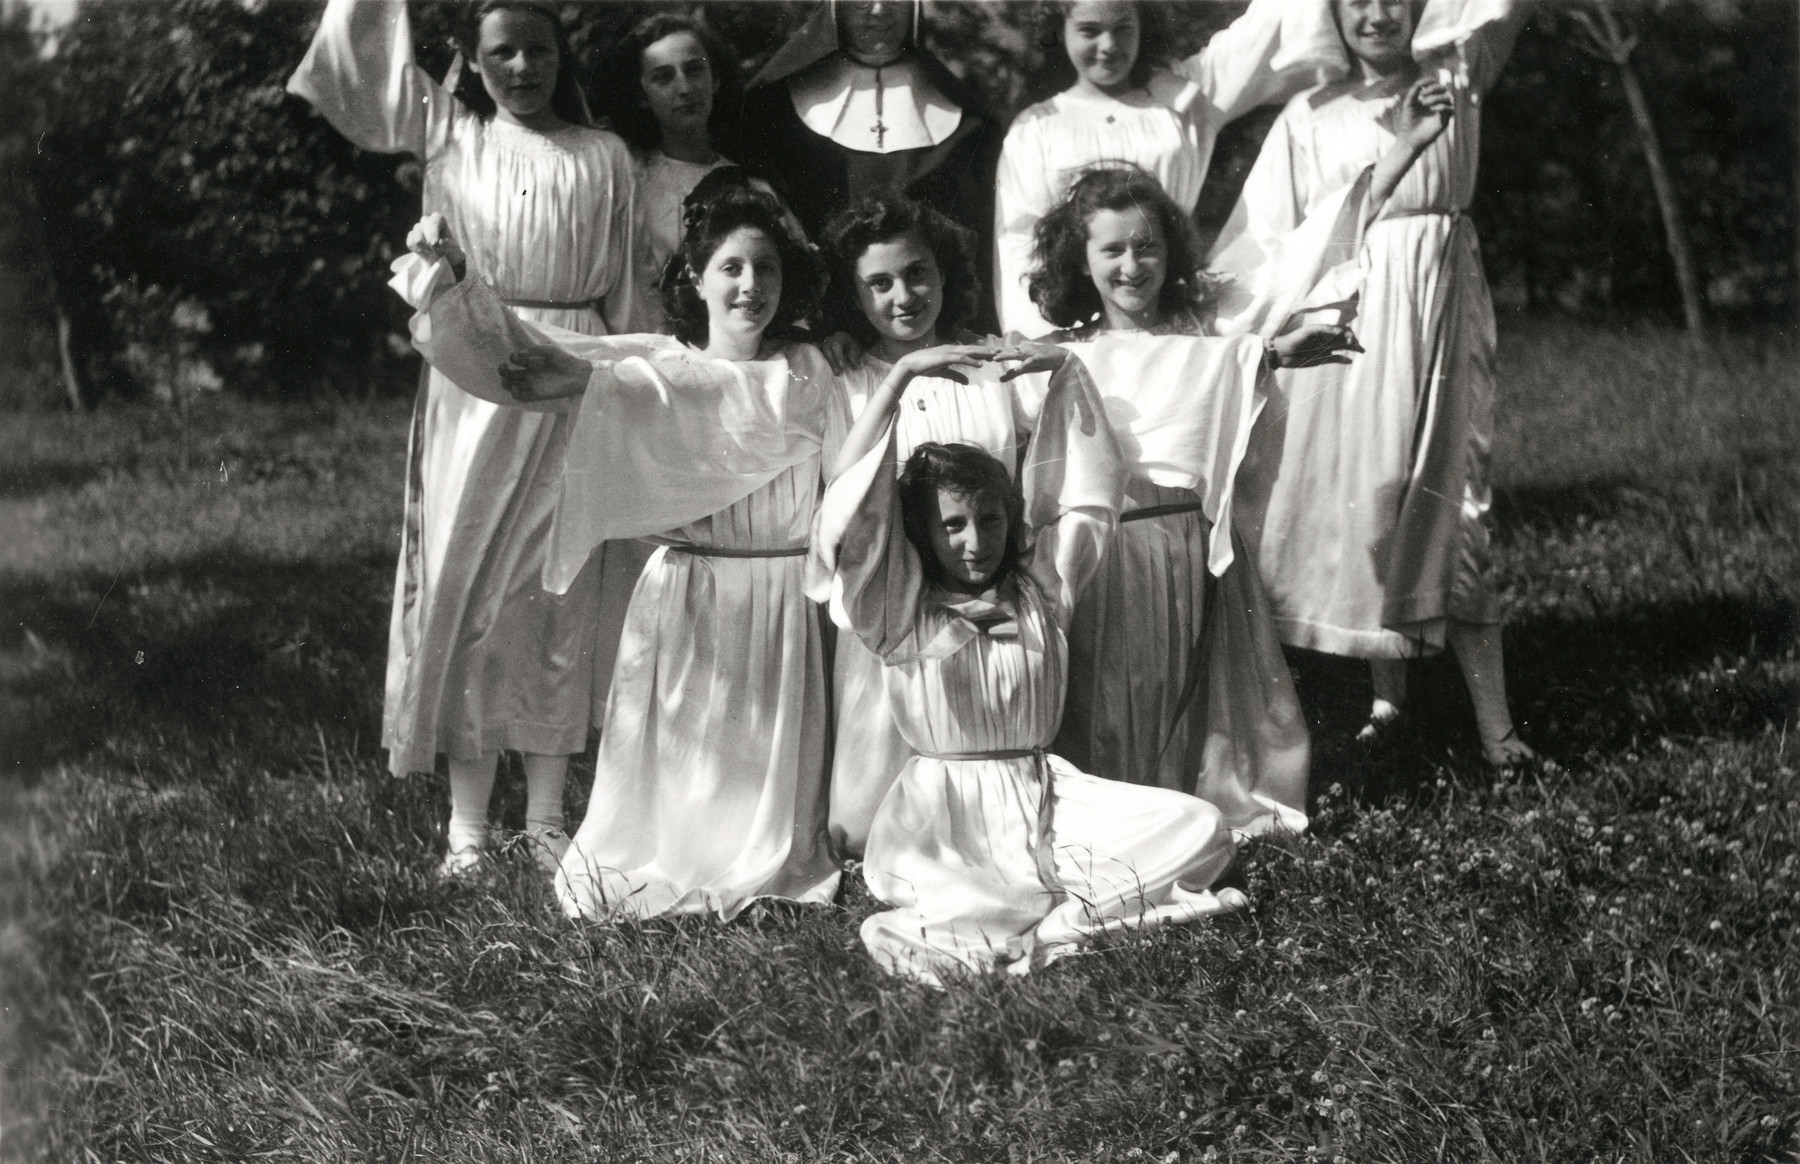 Group portrait of school girls, including Jewish girls in hiding, in the St. Antoine de Padue convent.

Liliane Ferdman is pictured in front with her hands above her head.